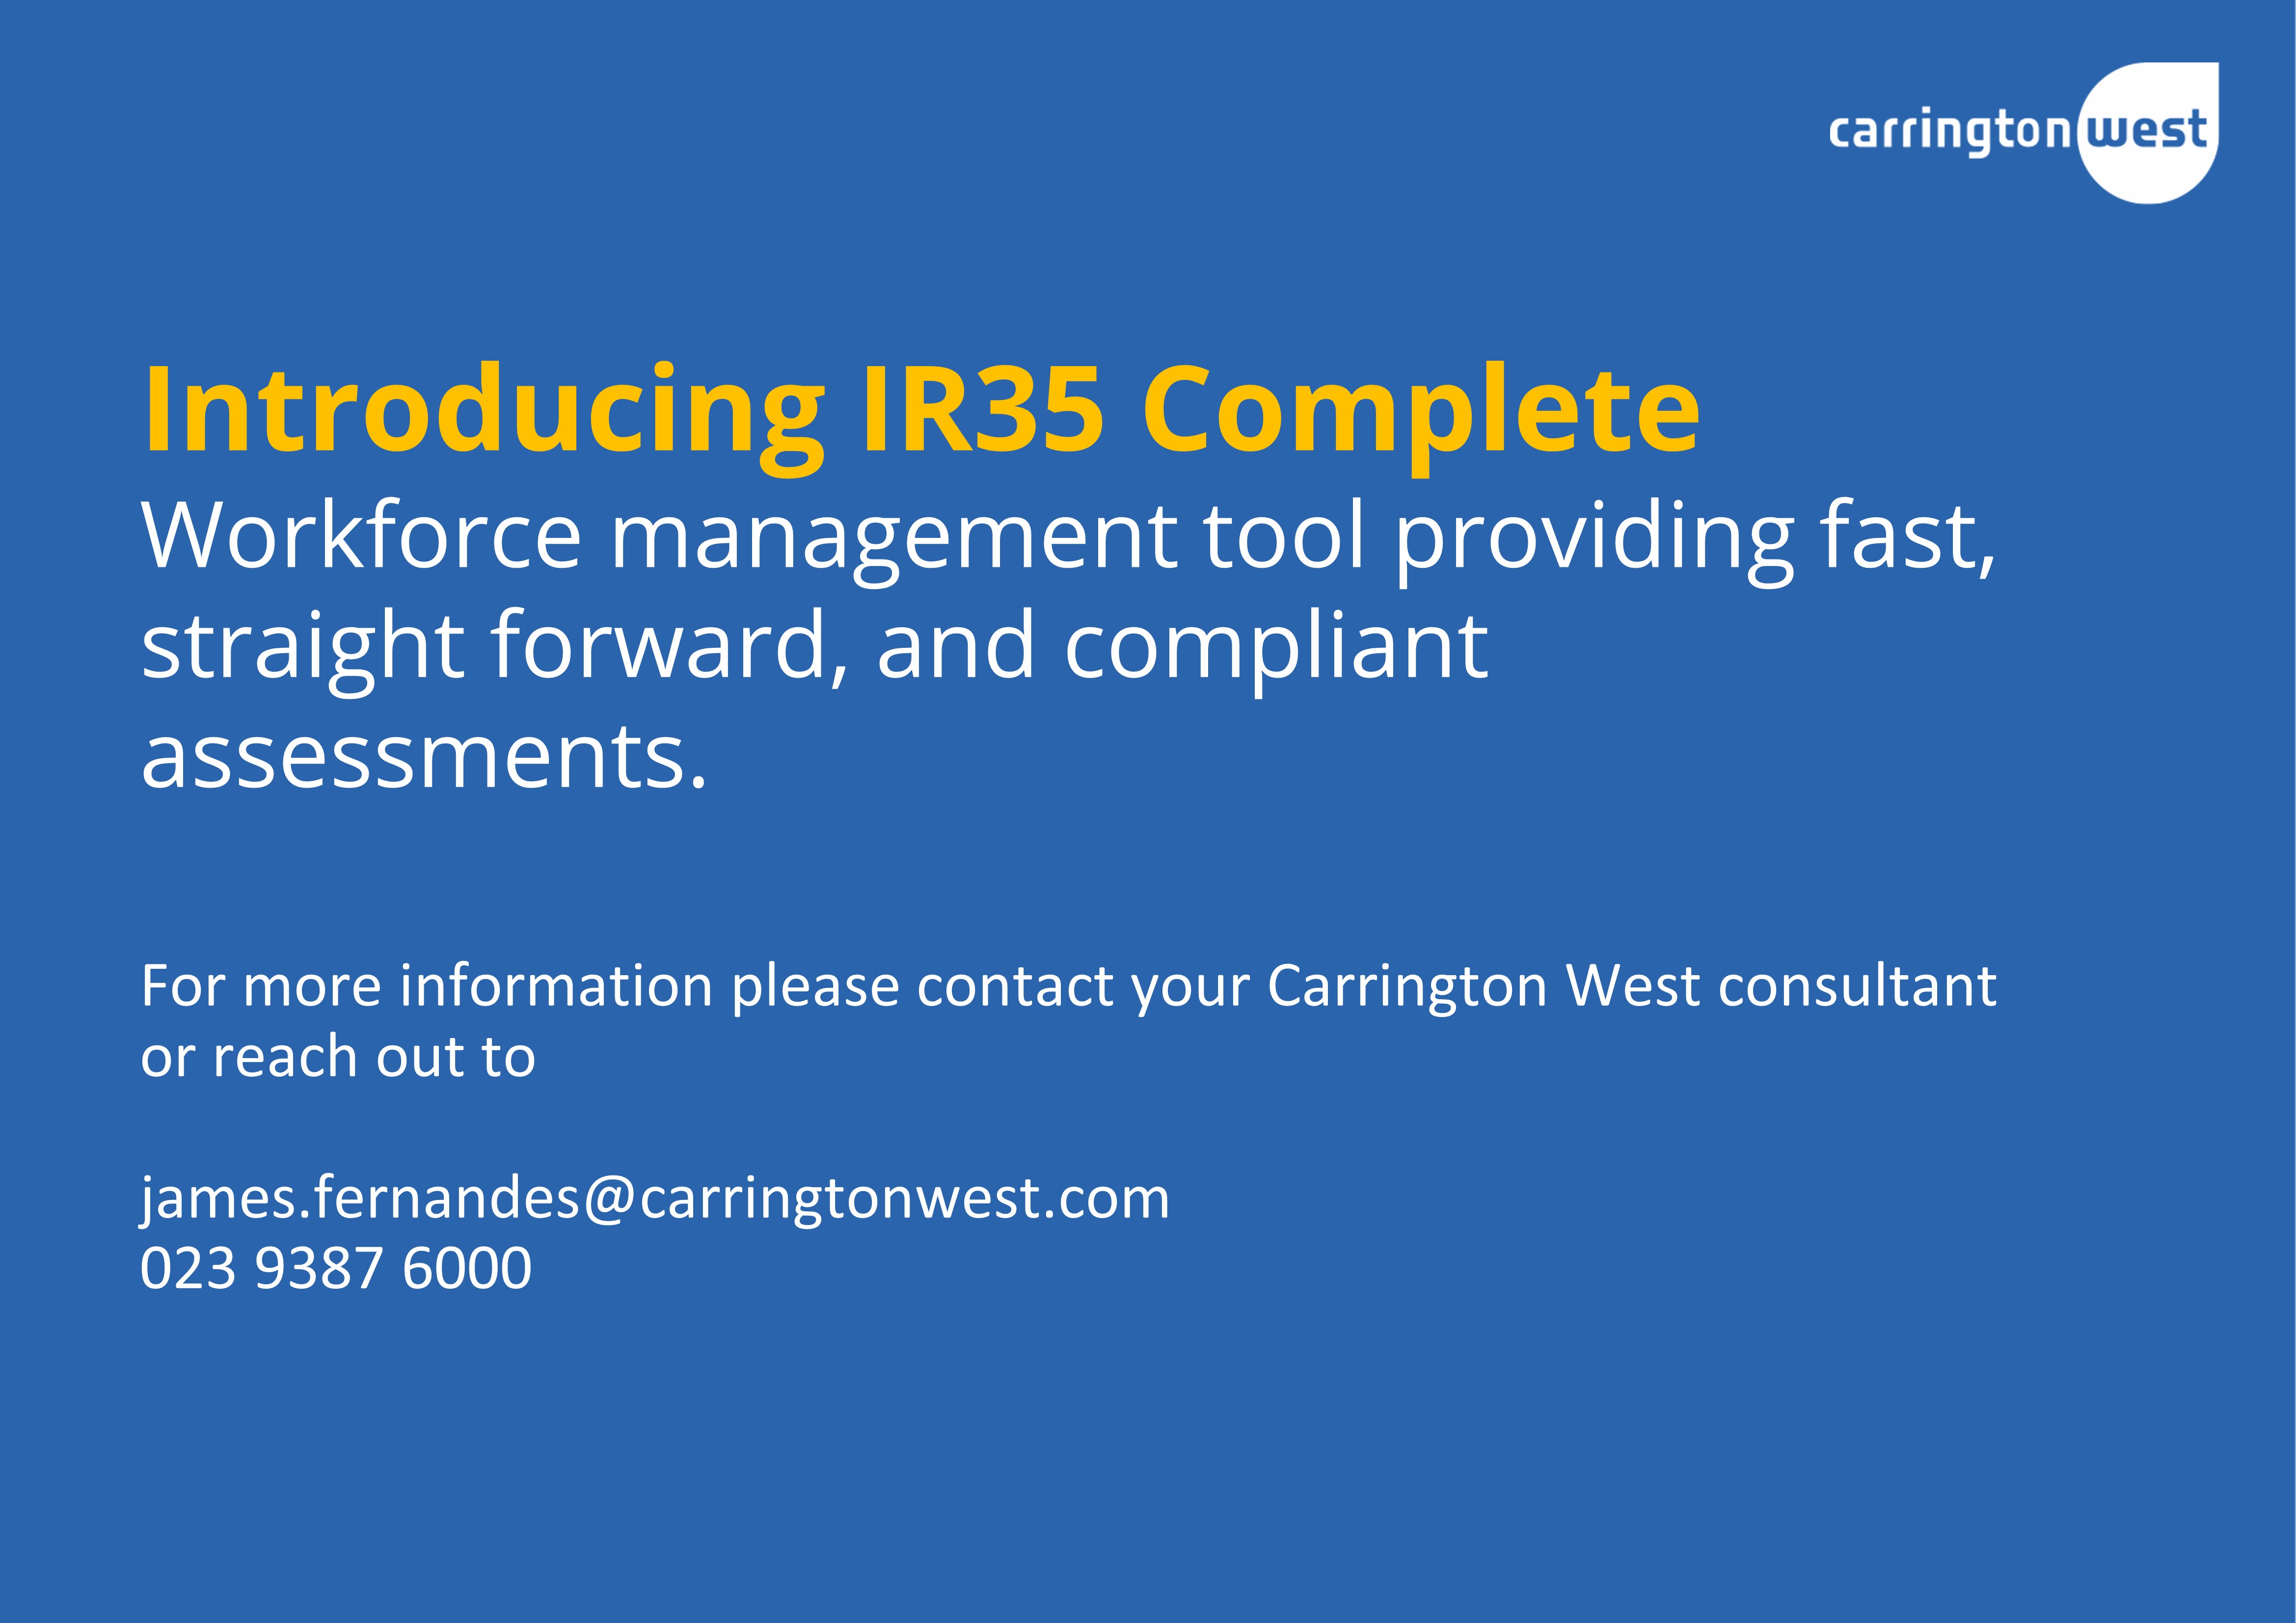 Introducing IR35 Complete Workforce Management Tool